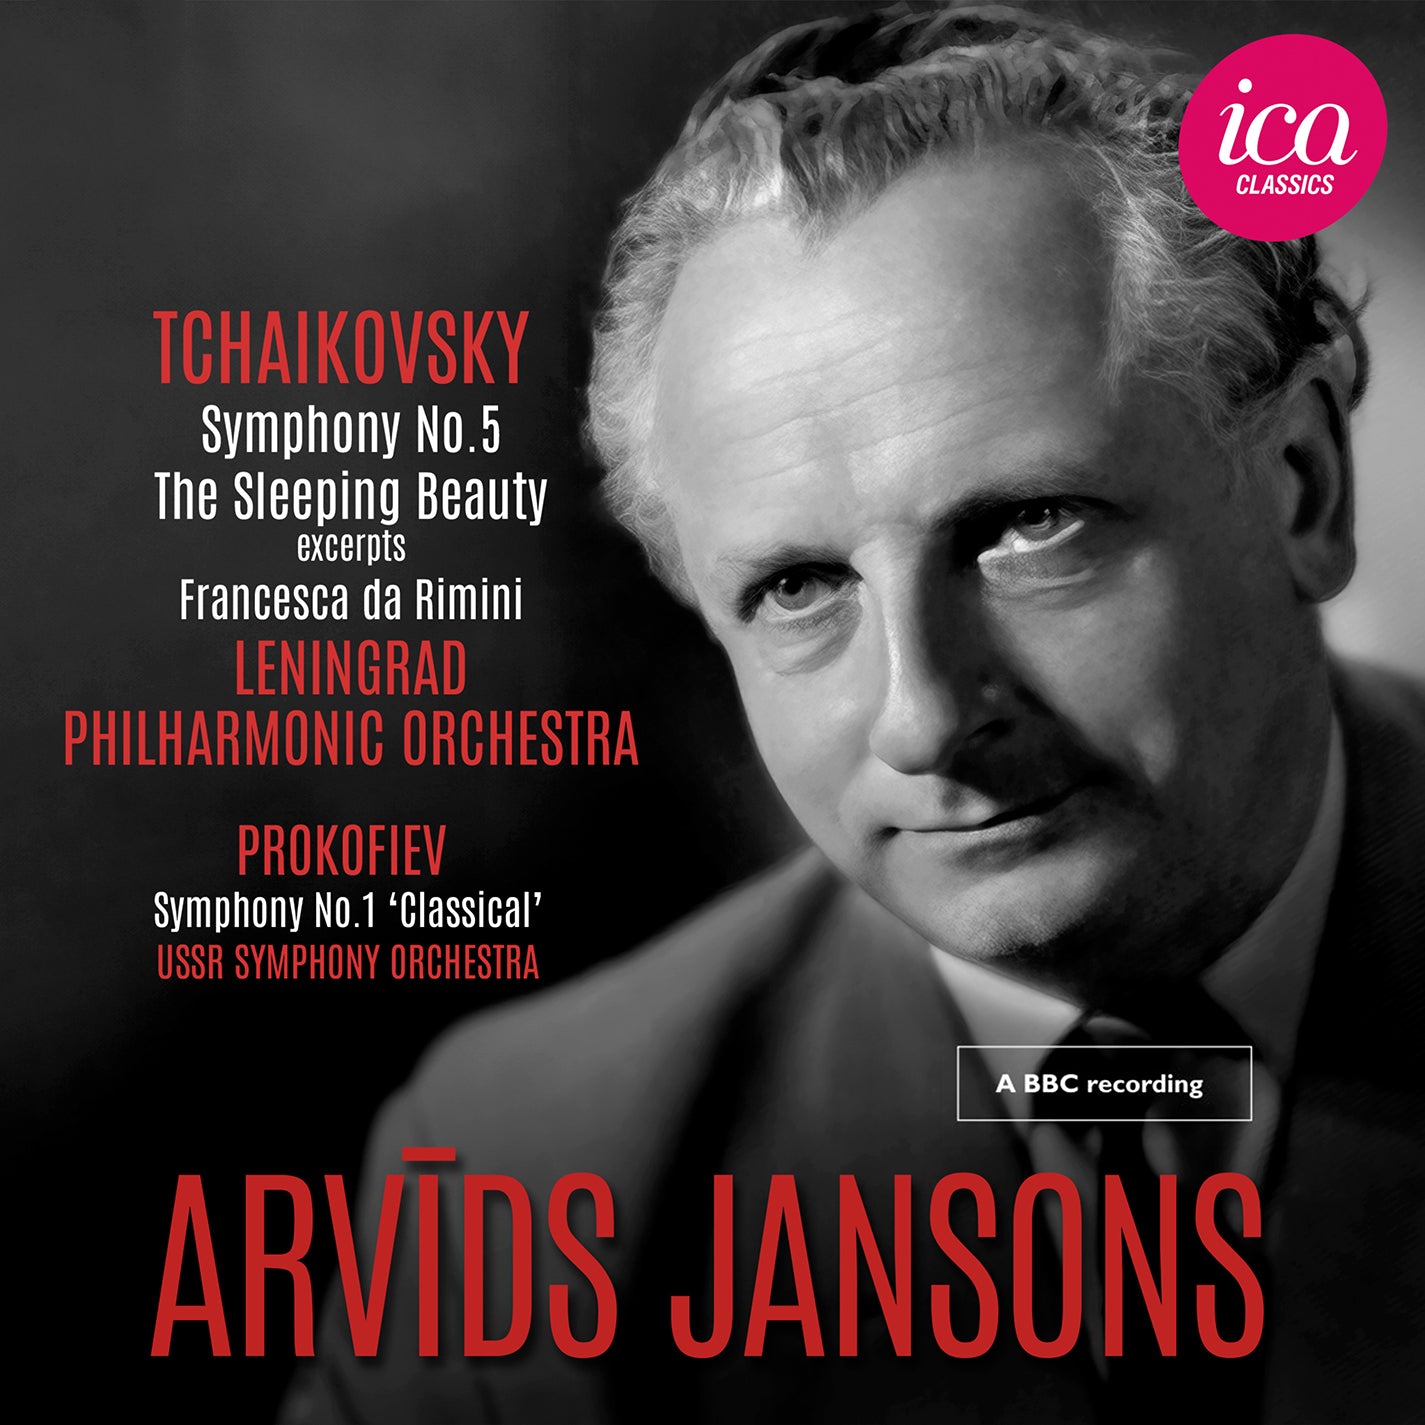 Tchaikovsky & Prokofiev / Arvids Jansons